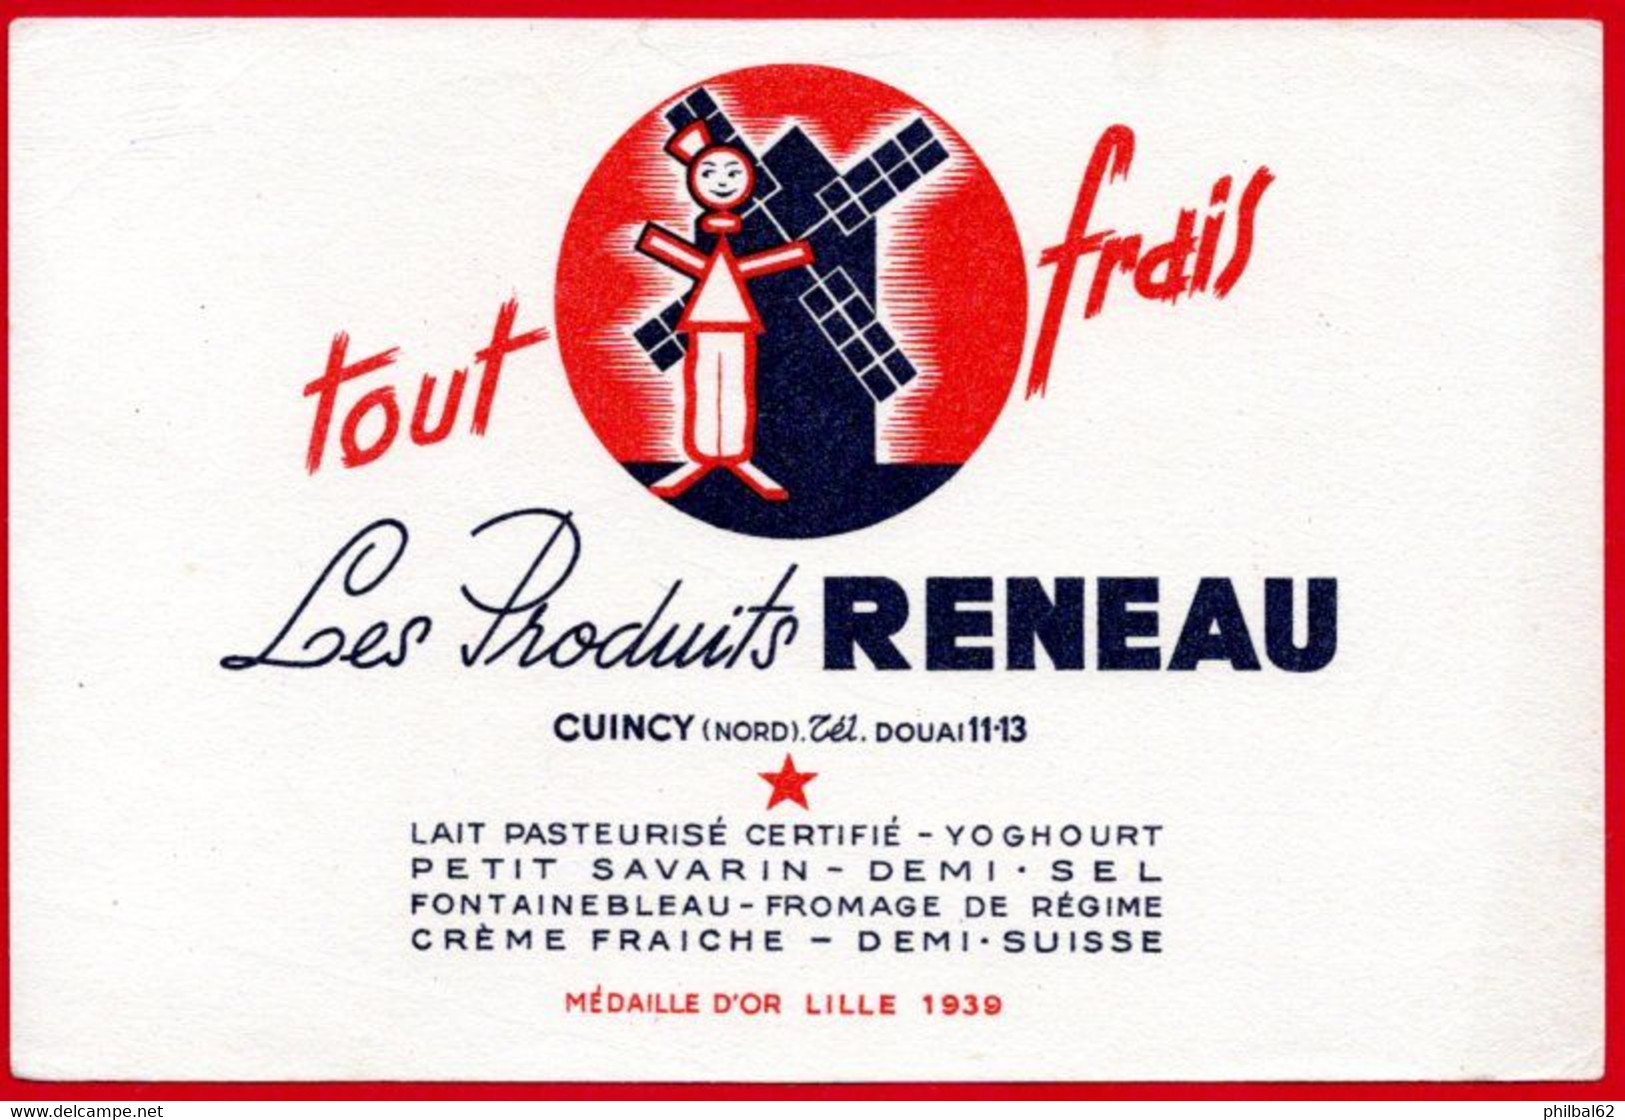 Buvard Produits Reneau, Cuincy, Nord. - Dairy